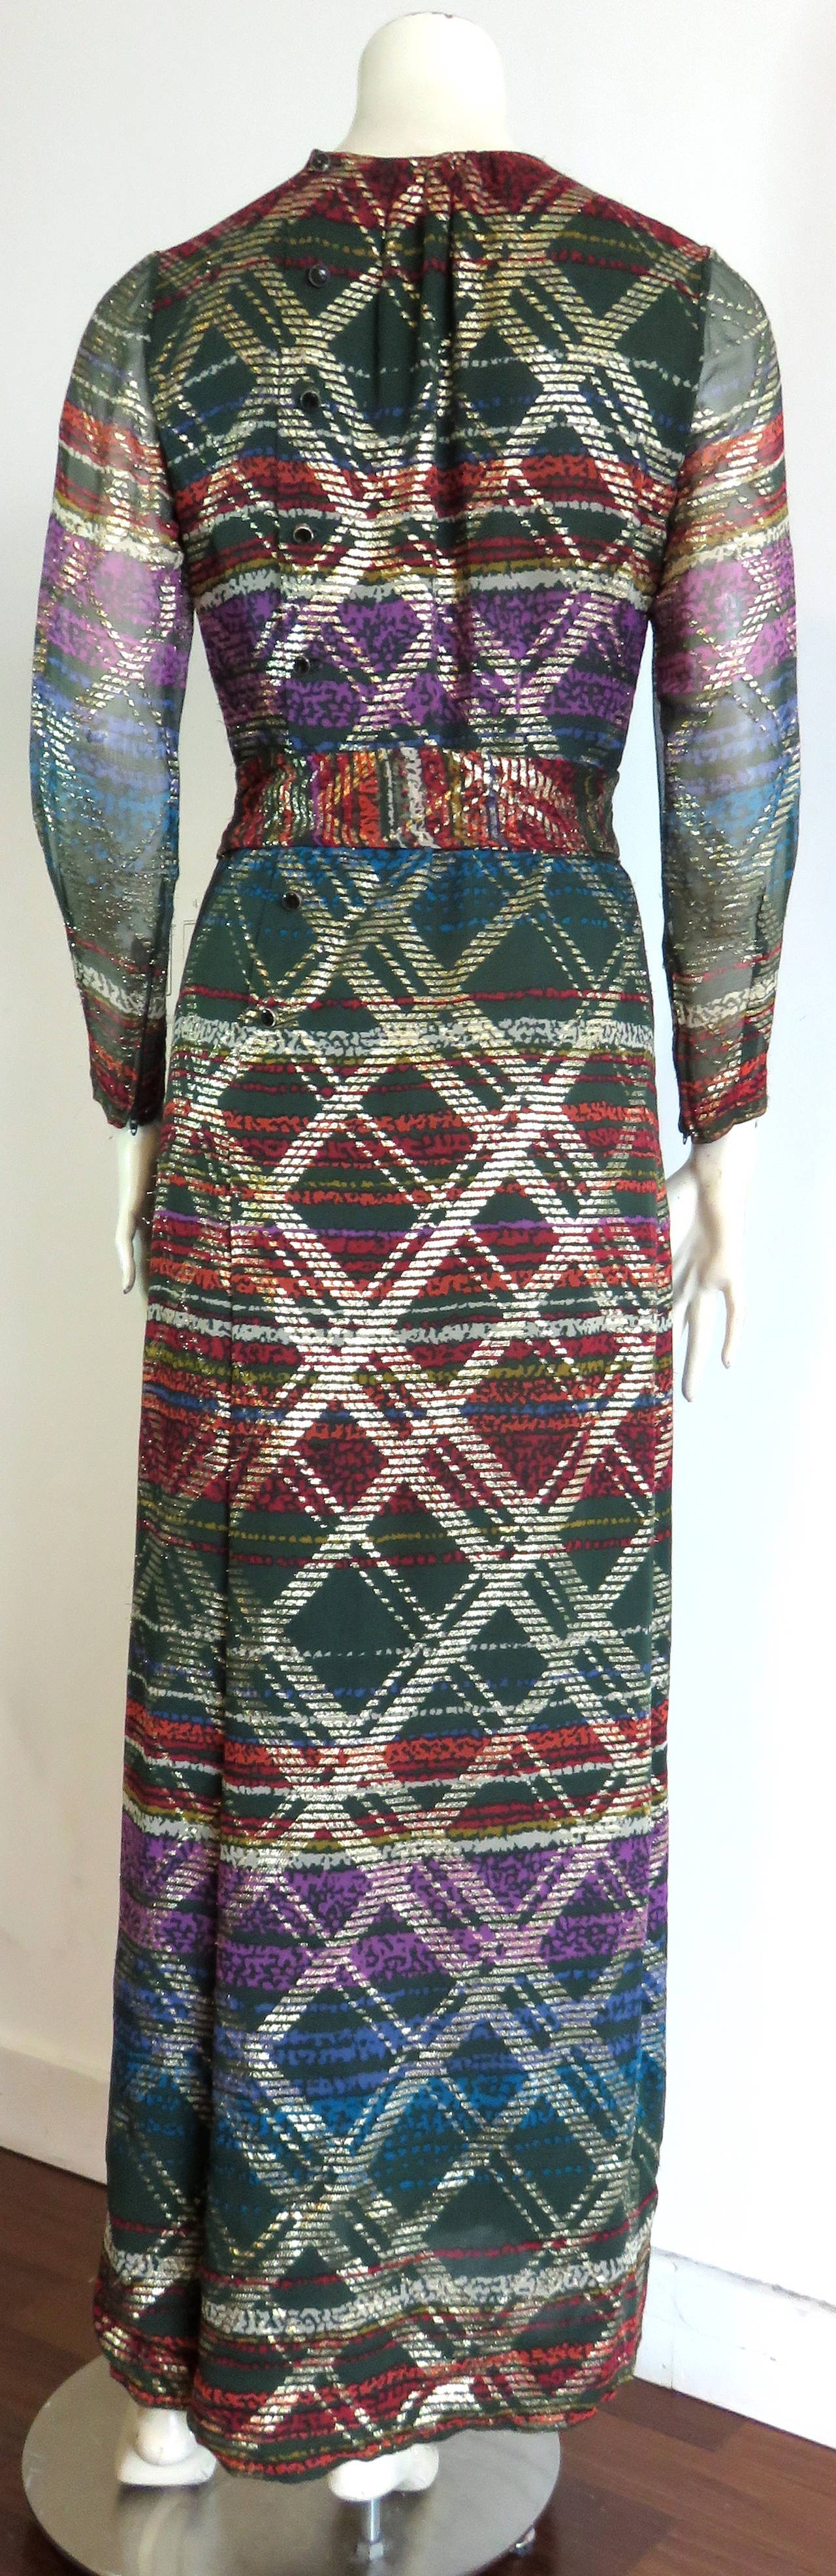 1975 PAULINE TRIGERE Metallic silk chiffon evening dress For Sale 1